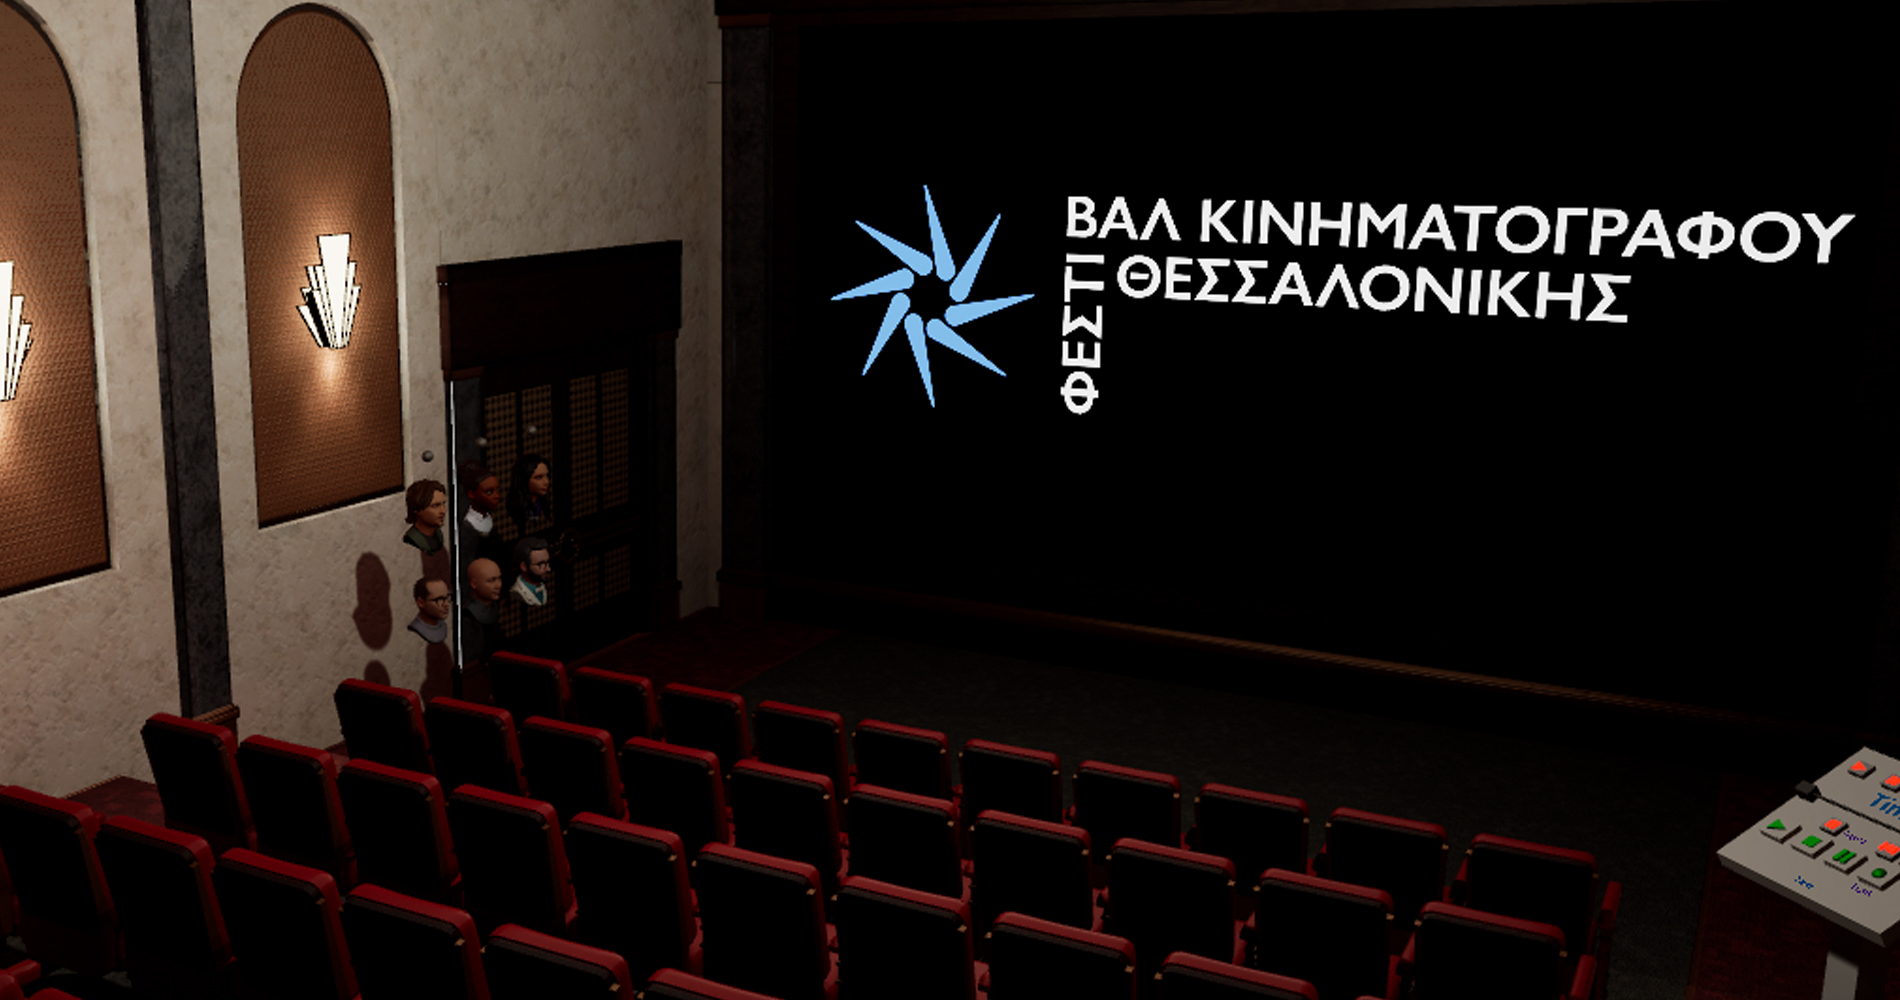 You are currently viewing Το cine.gr στο 62ου Φεστιβάλ Κινηματογράφου Θεσσαλονίκης